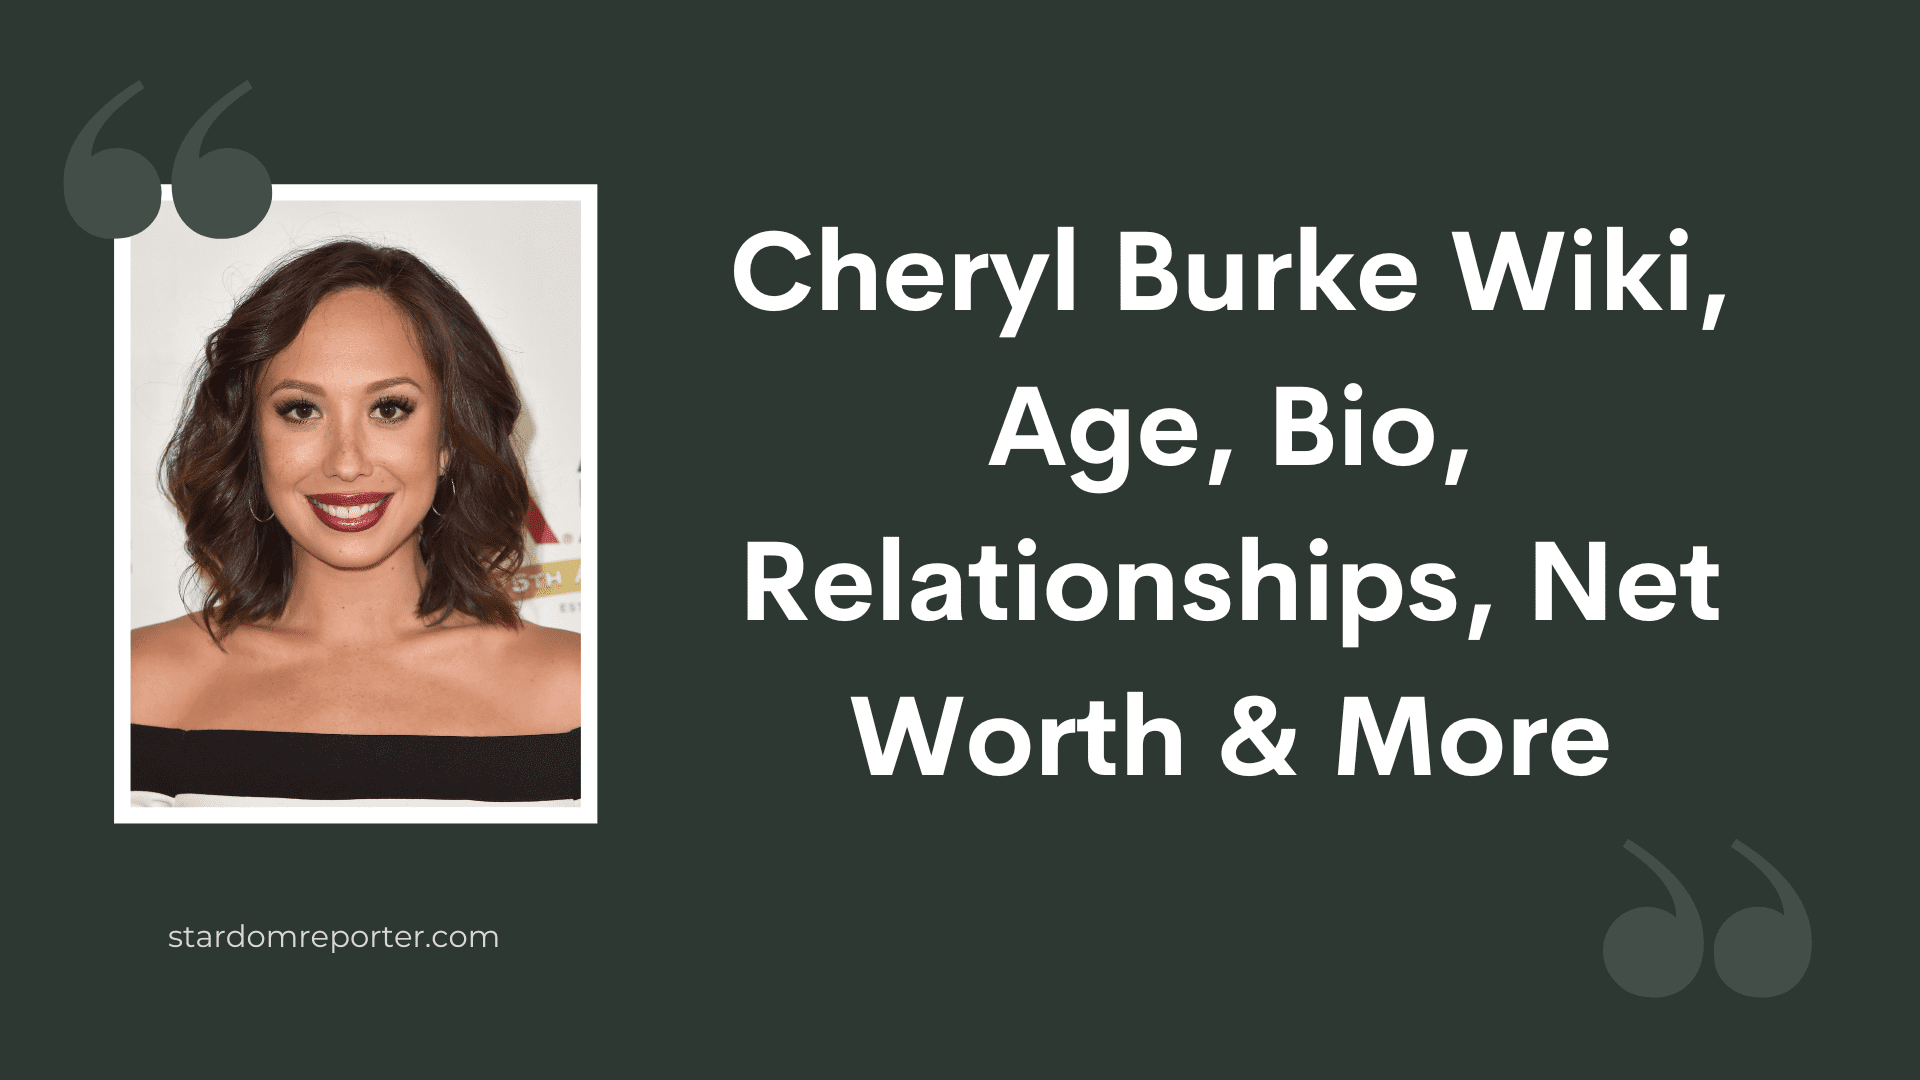 Cheryl Burke Wiki, Age, Bio, Relationships, Net Worth & More - 30